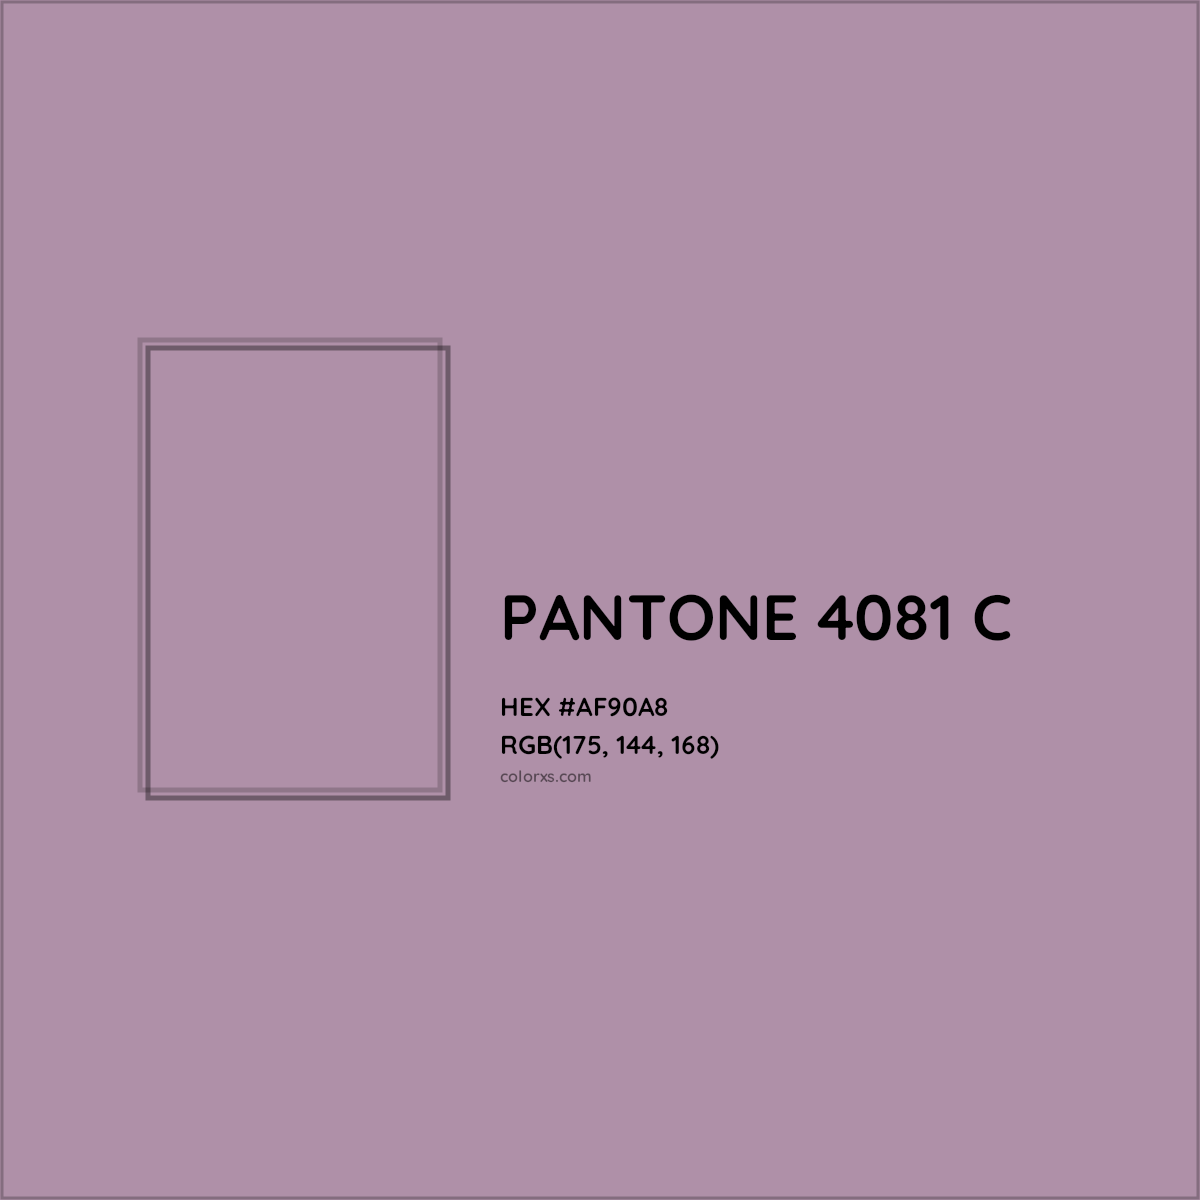 HEX #AF90A8 PANTONE 4081 C CMS Pantone PMS - Color Code